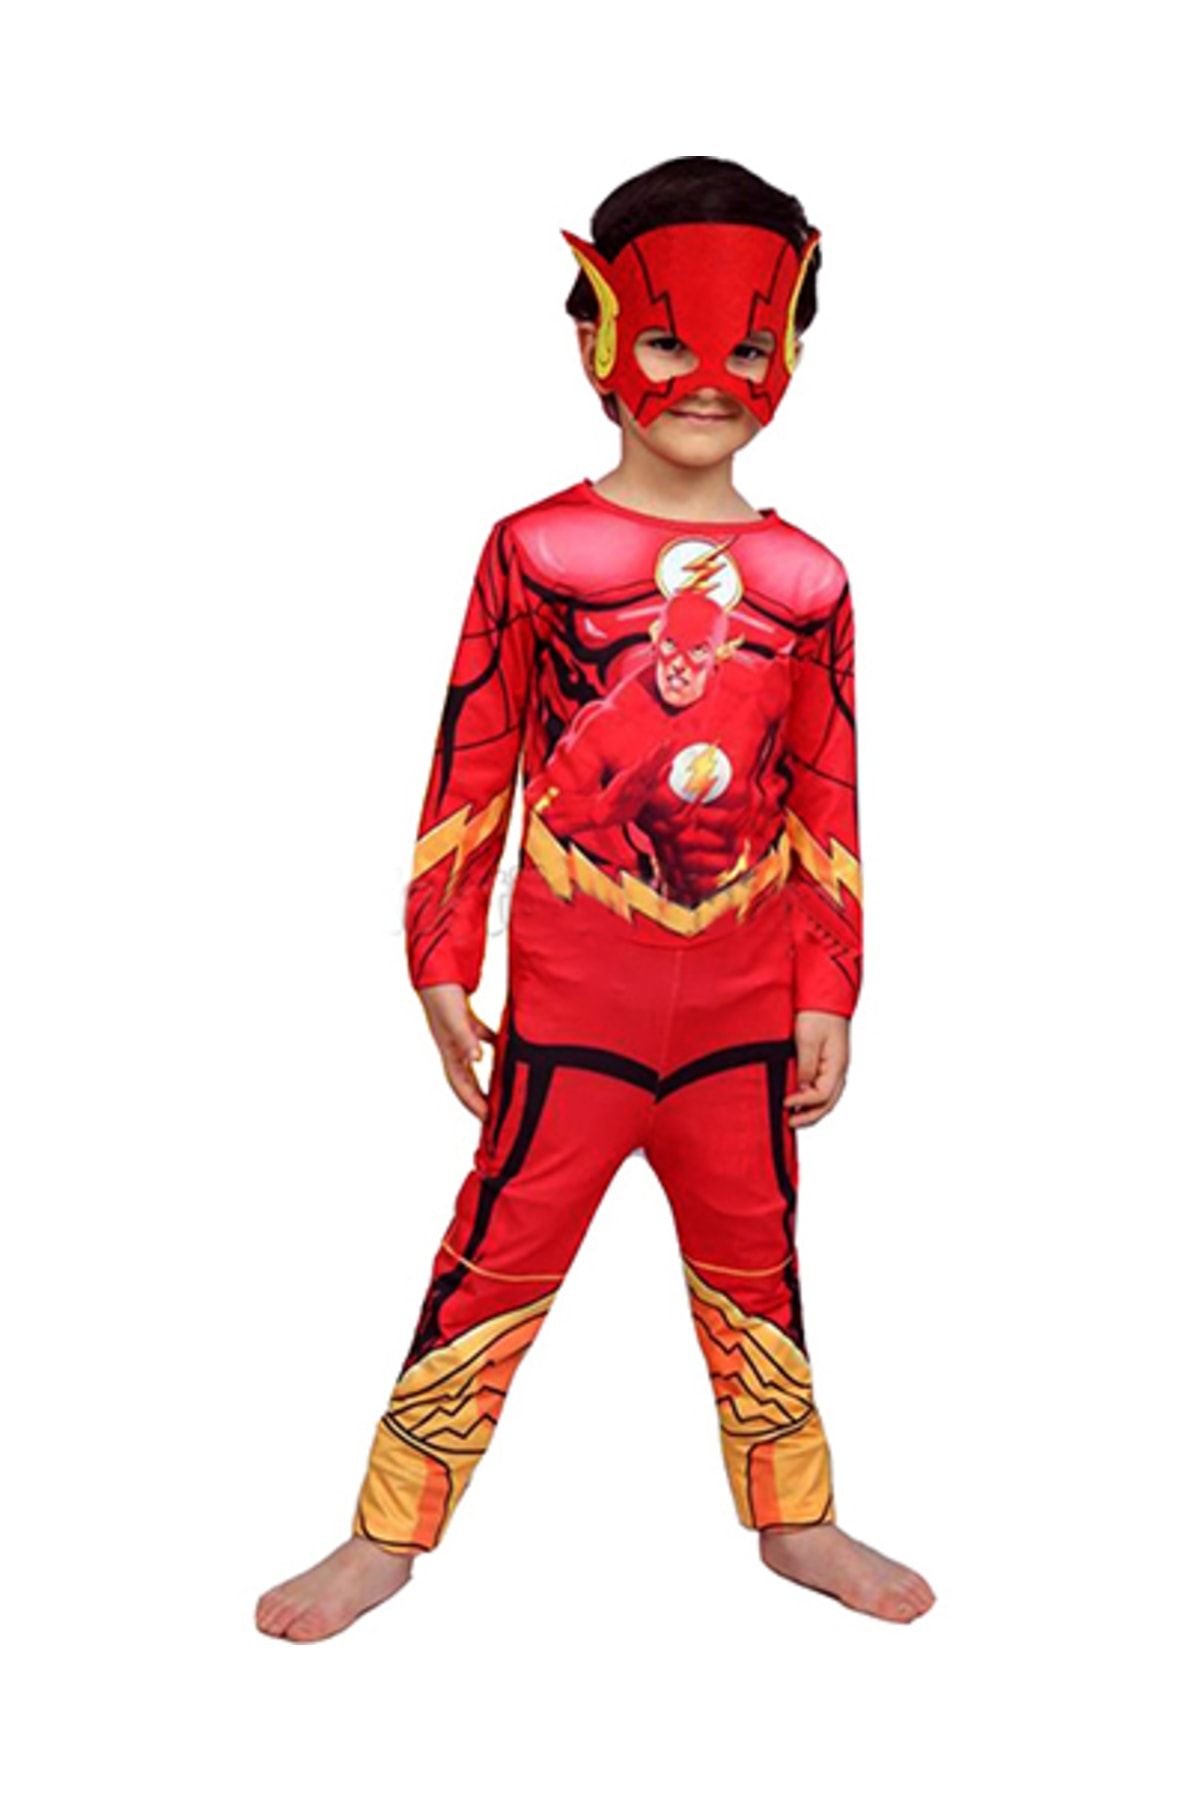 META Flash Kostümü Çocuk - Flash Kostüm Ve Maske Full Set